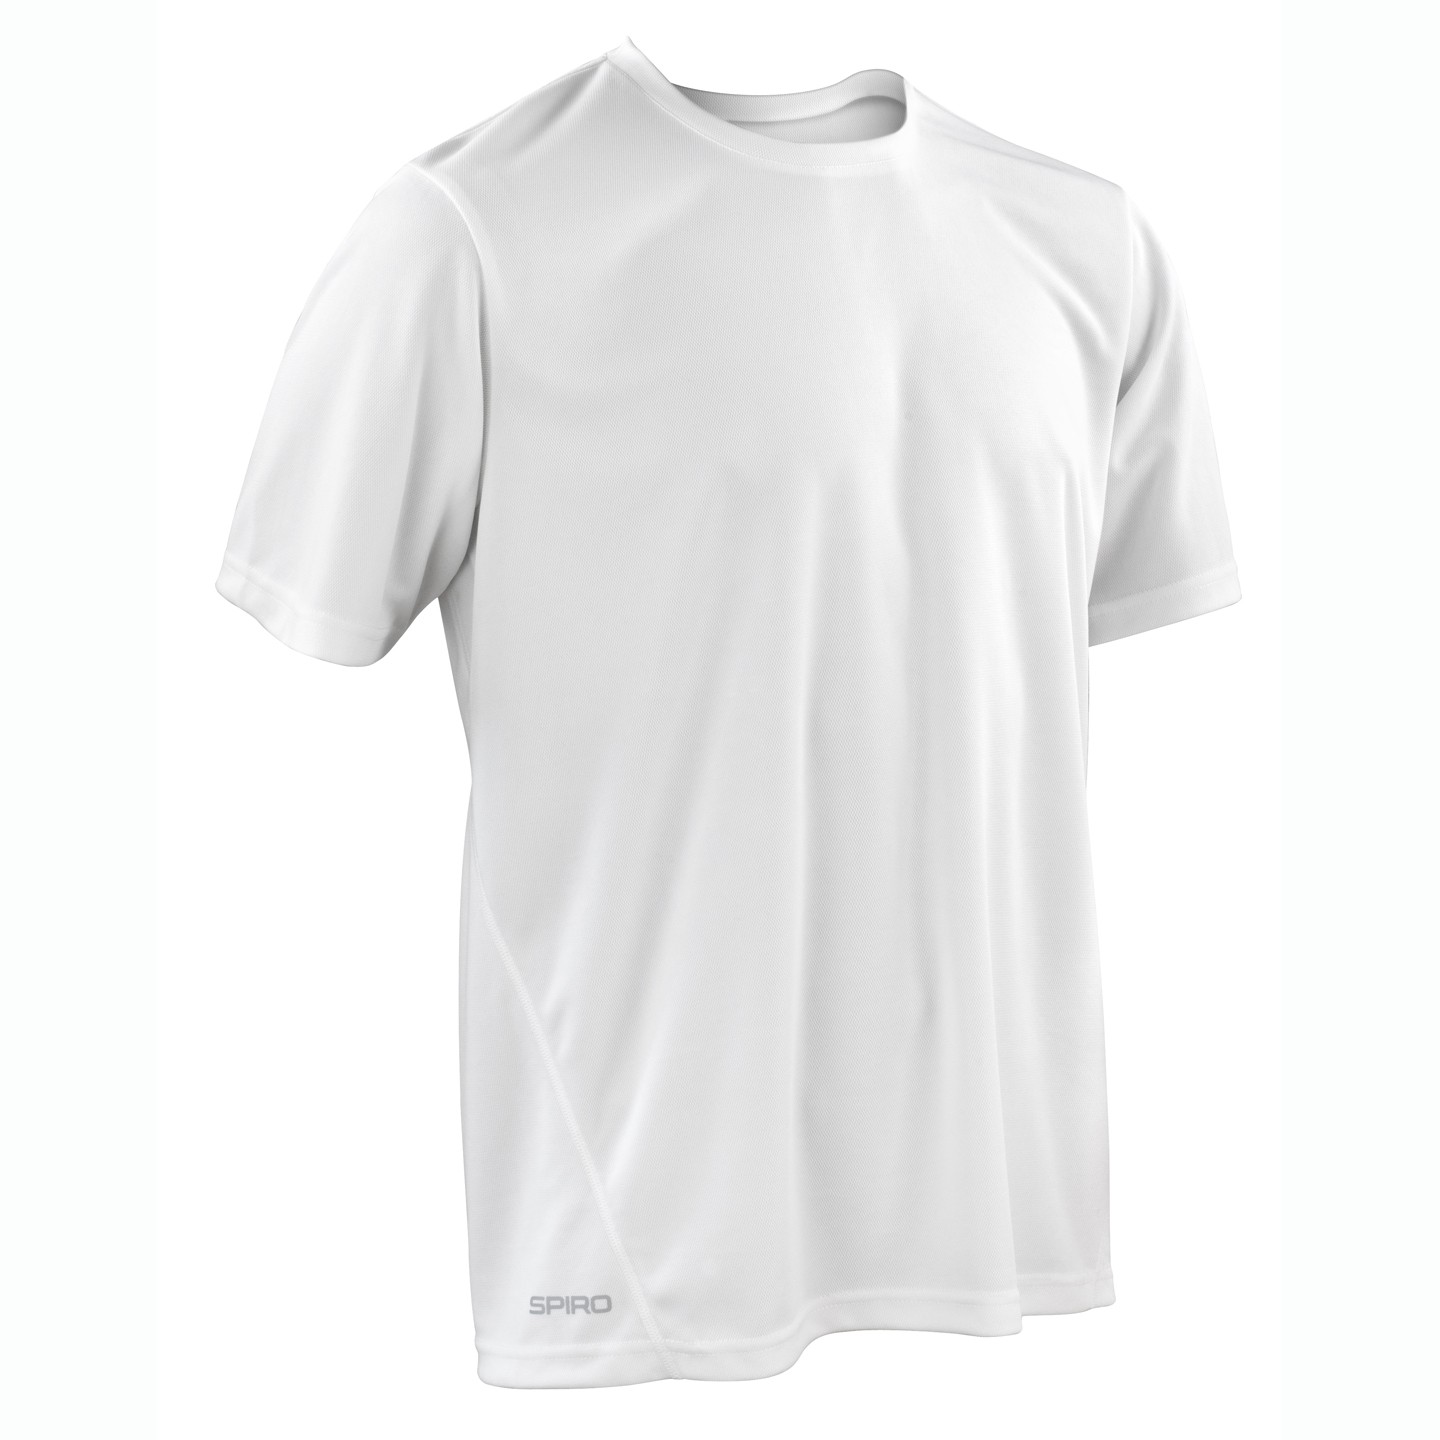 Spiro Womens/Ladies Sports Quick-Dry Short Sleeve Performance T-Shirt 